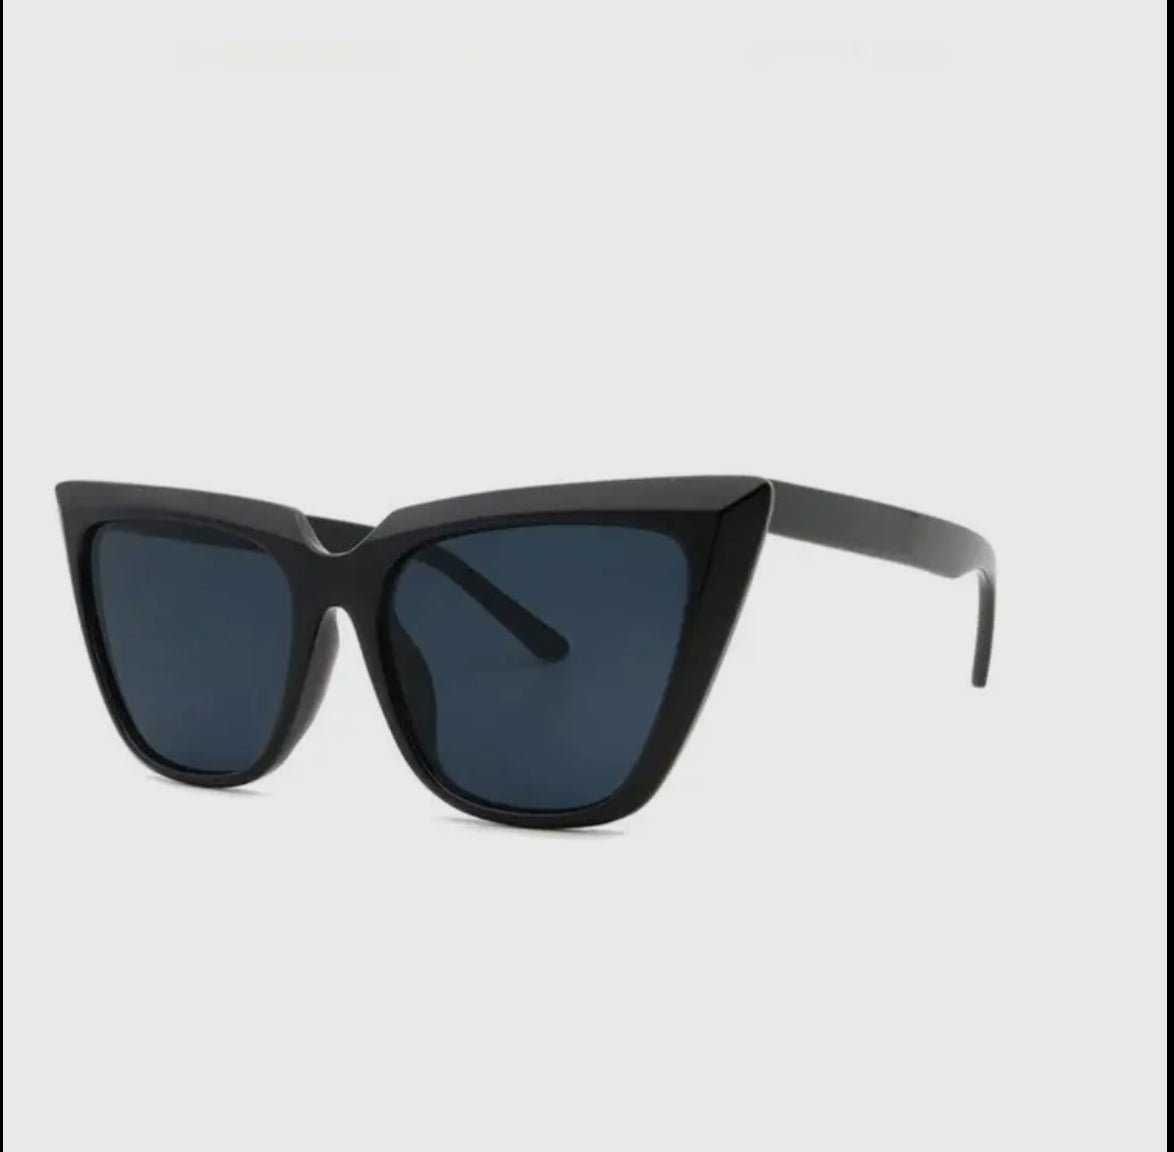 Priscilla Sunglasses by Shady Lady - Black - Blue Sky Fashions & Lingerie